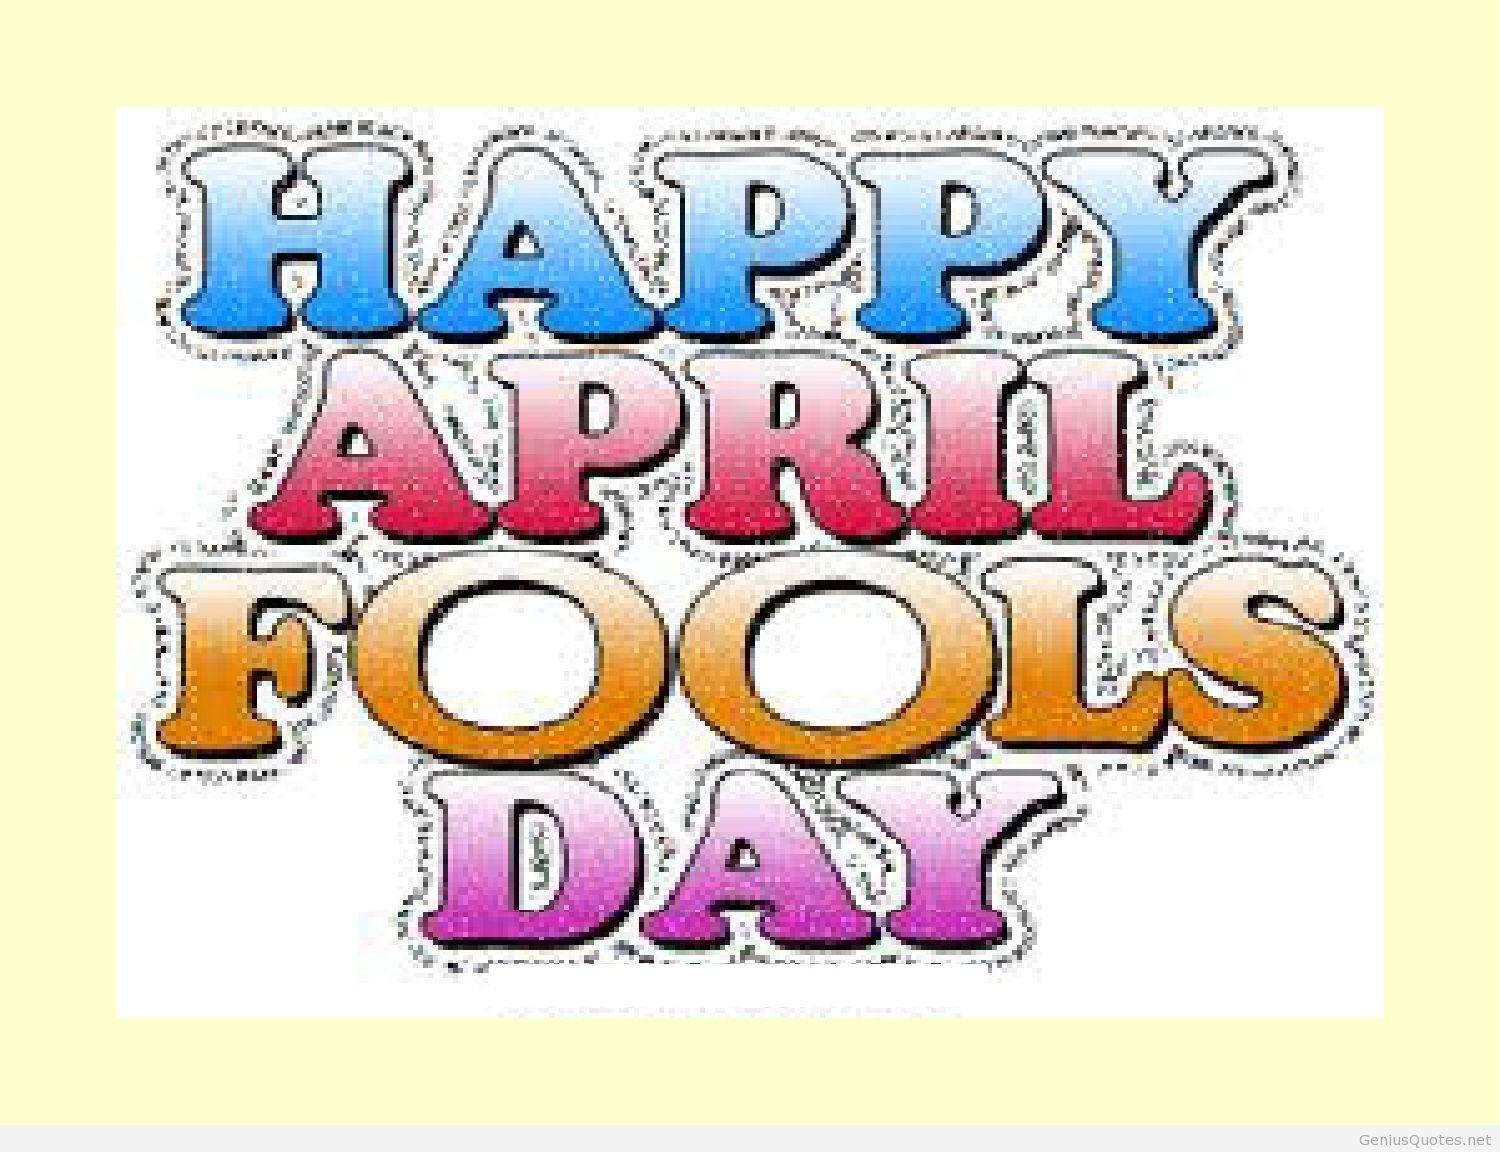 Happy April fools day HD wallpaper quote